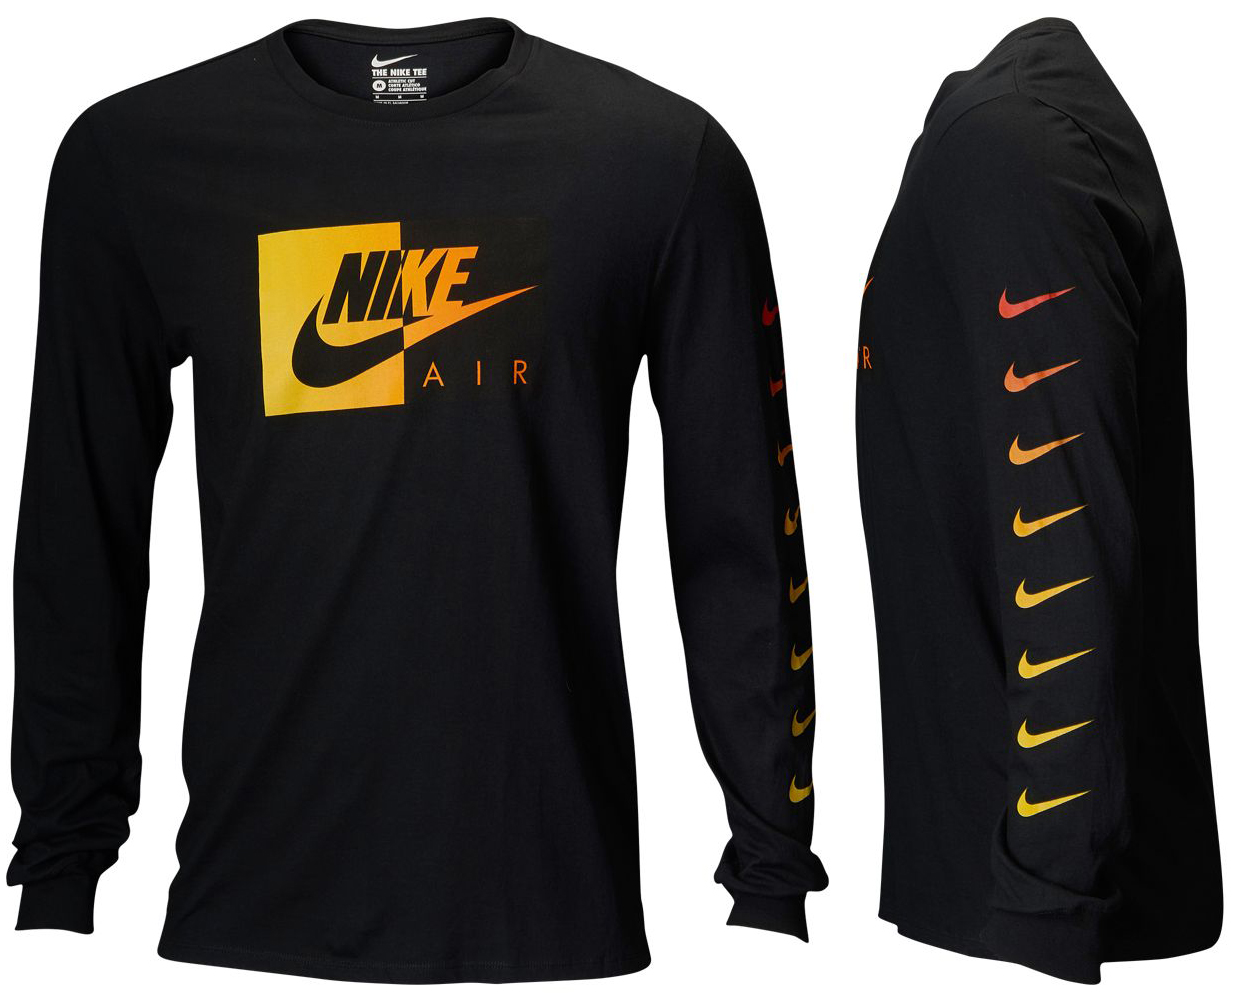 Nike Air Max Plus Mercurial Shirt Match | SneakerFits.com